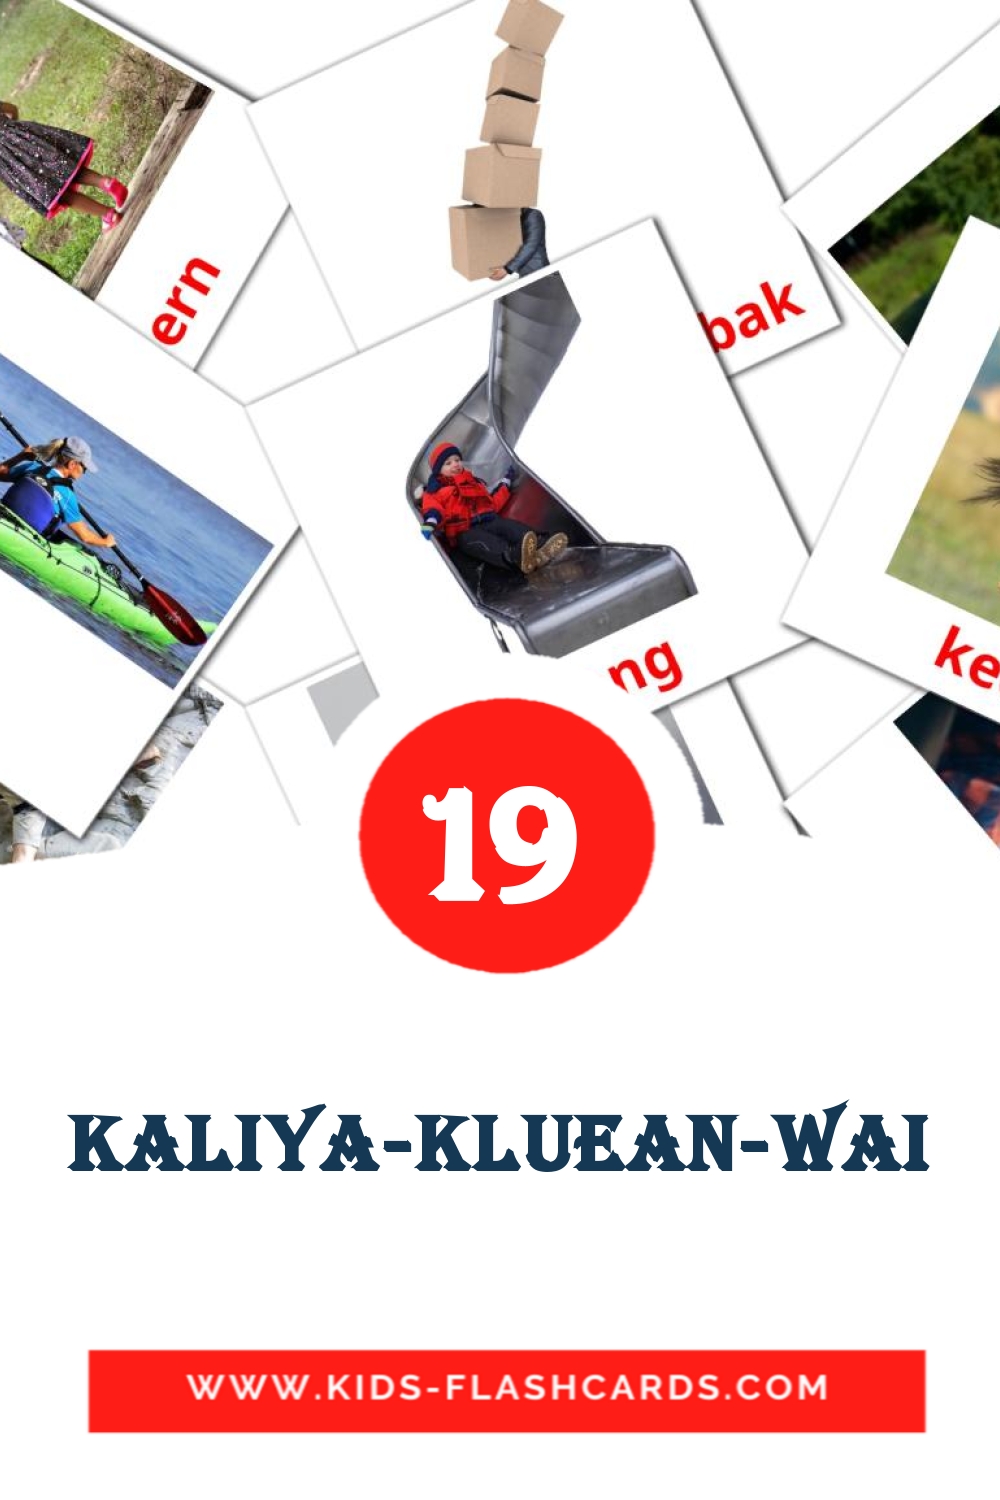 19 Kaliya-kluean-wai Picture Cards for Kindergarden in amharic